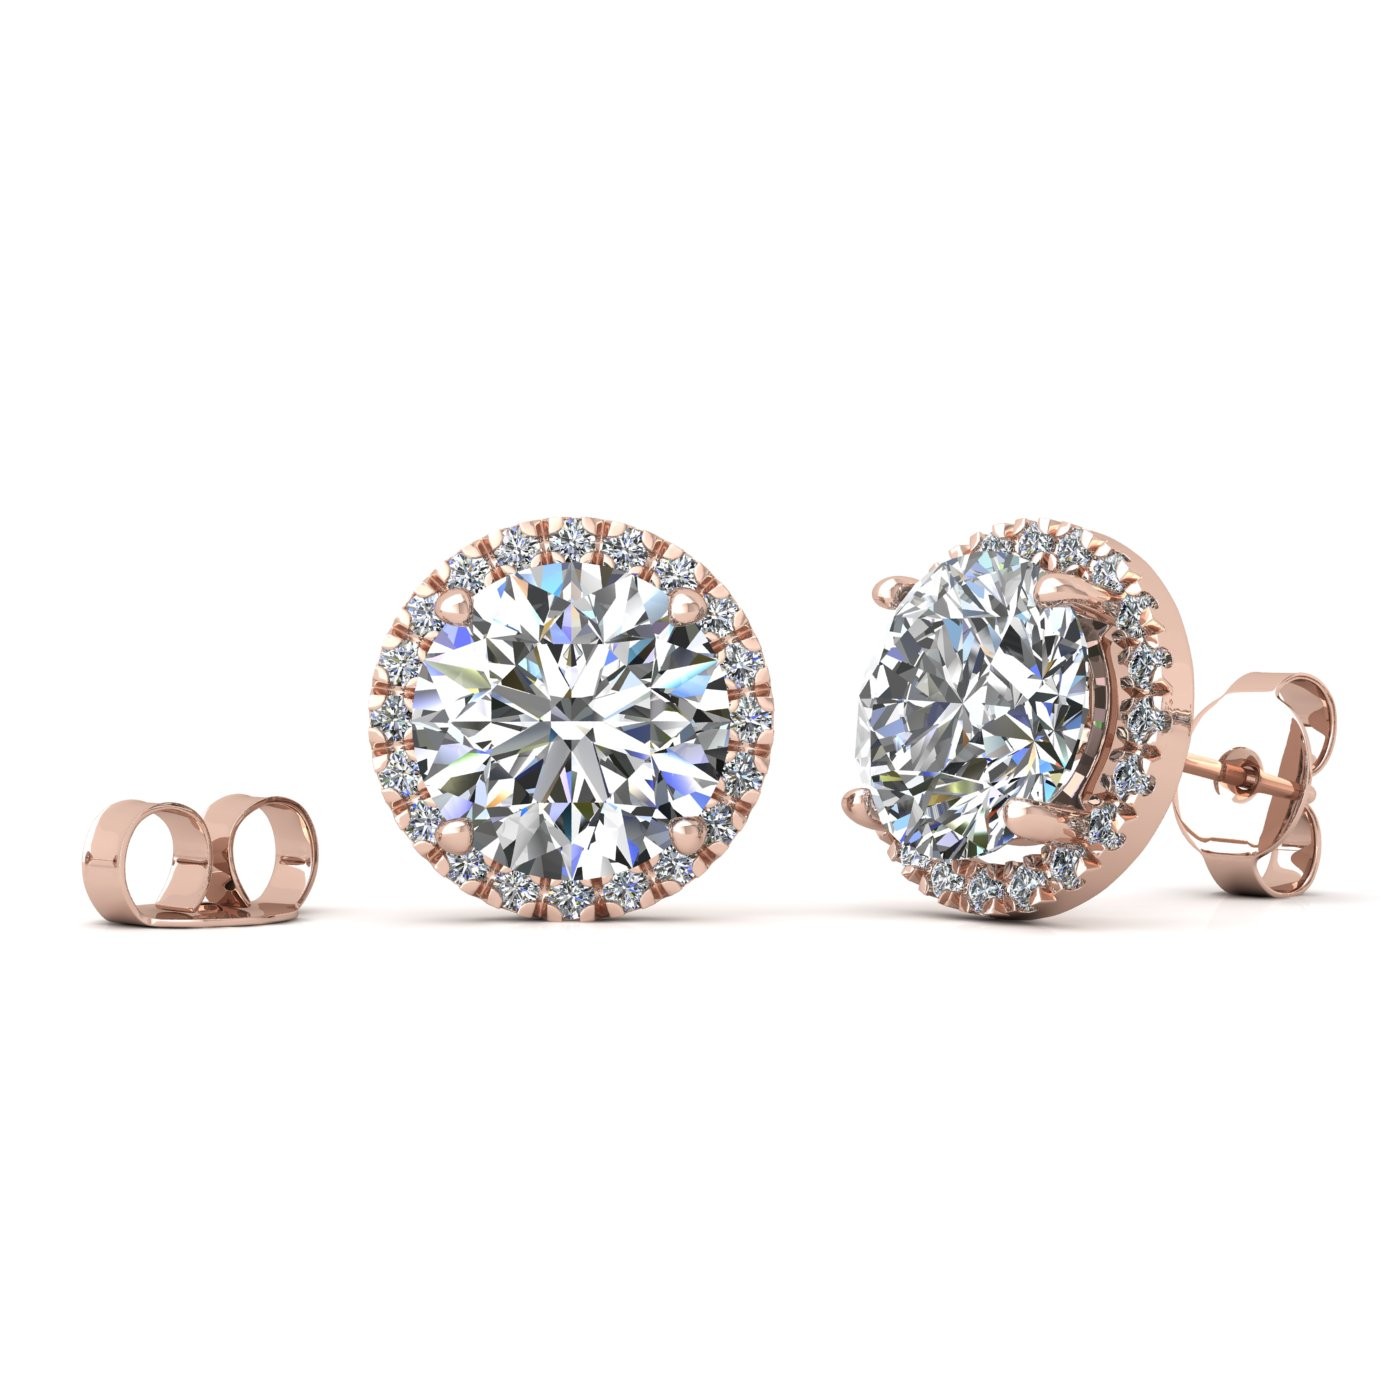 18k rose gold  0,7 ct each (1,4 tcw) 4 prongs round shape diamond earrings with diamond pavÉ set halo Photos & images